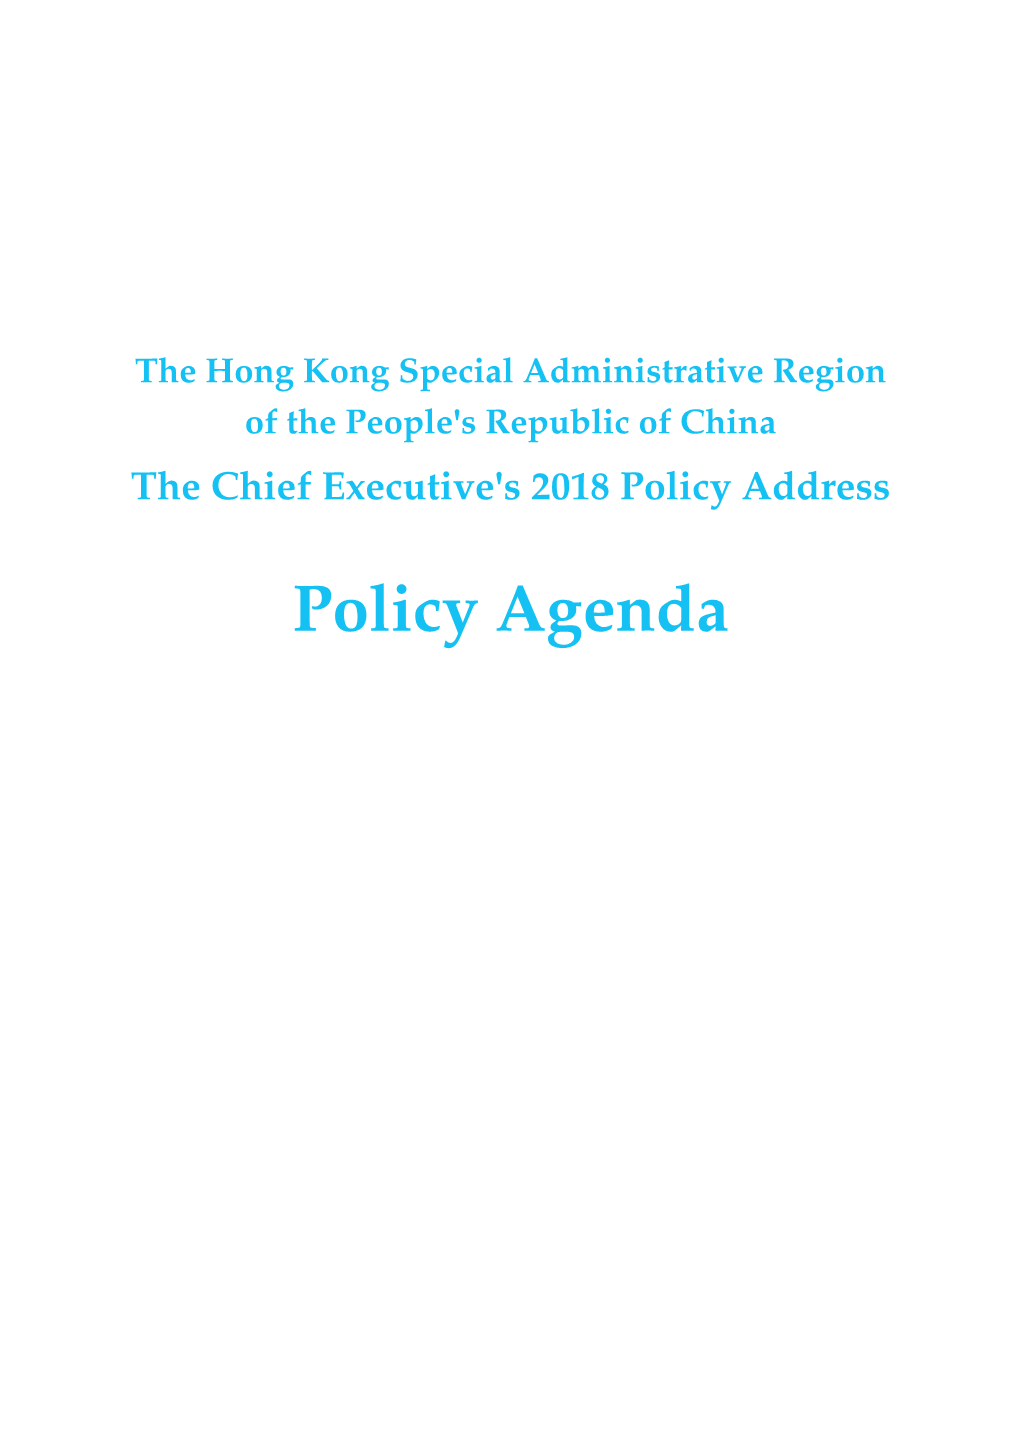 The Chief Executive's 2018 Policy Agenda